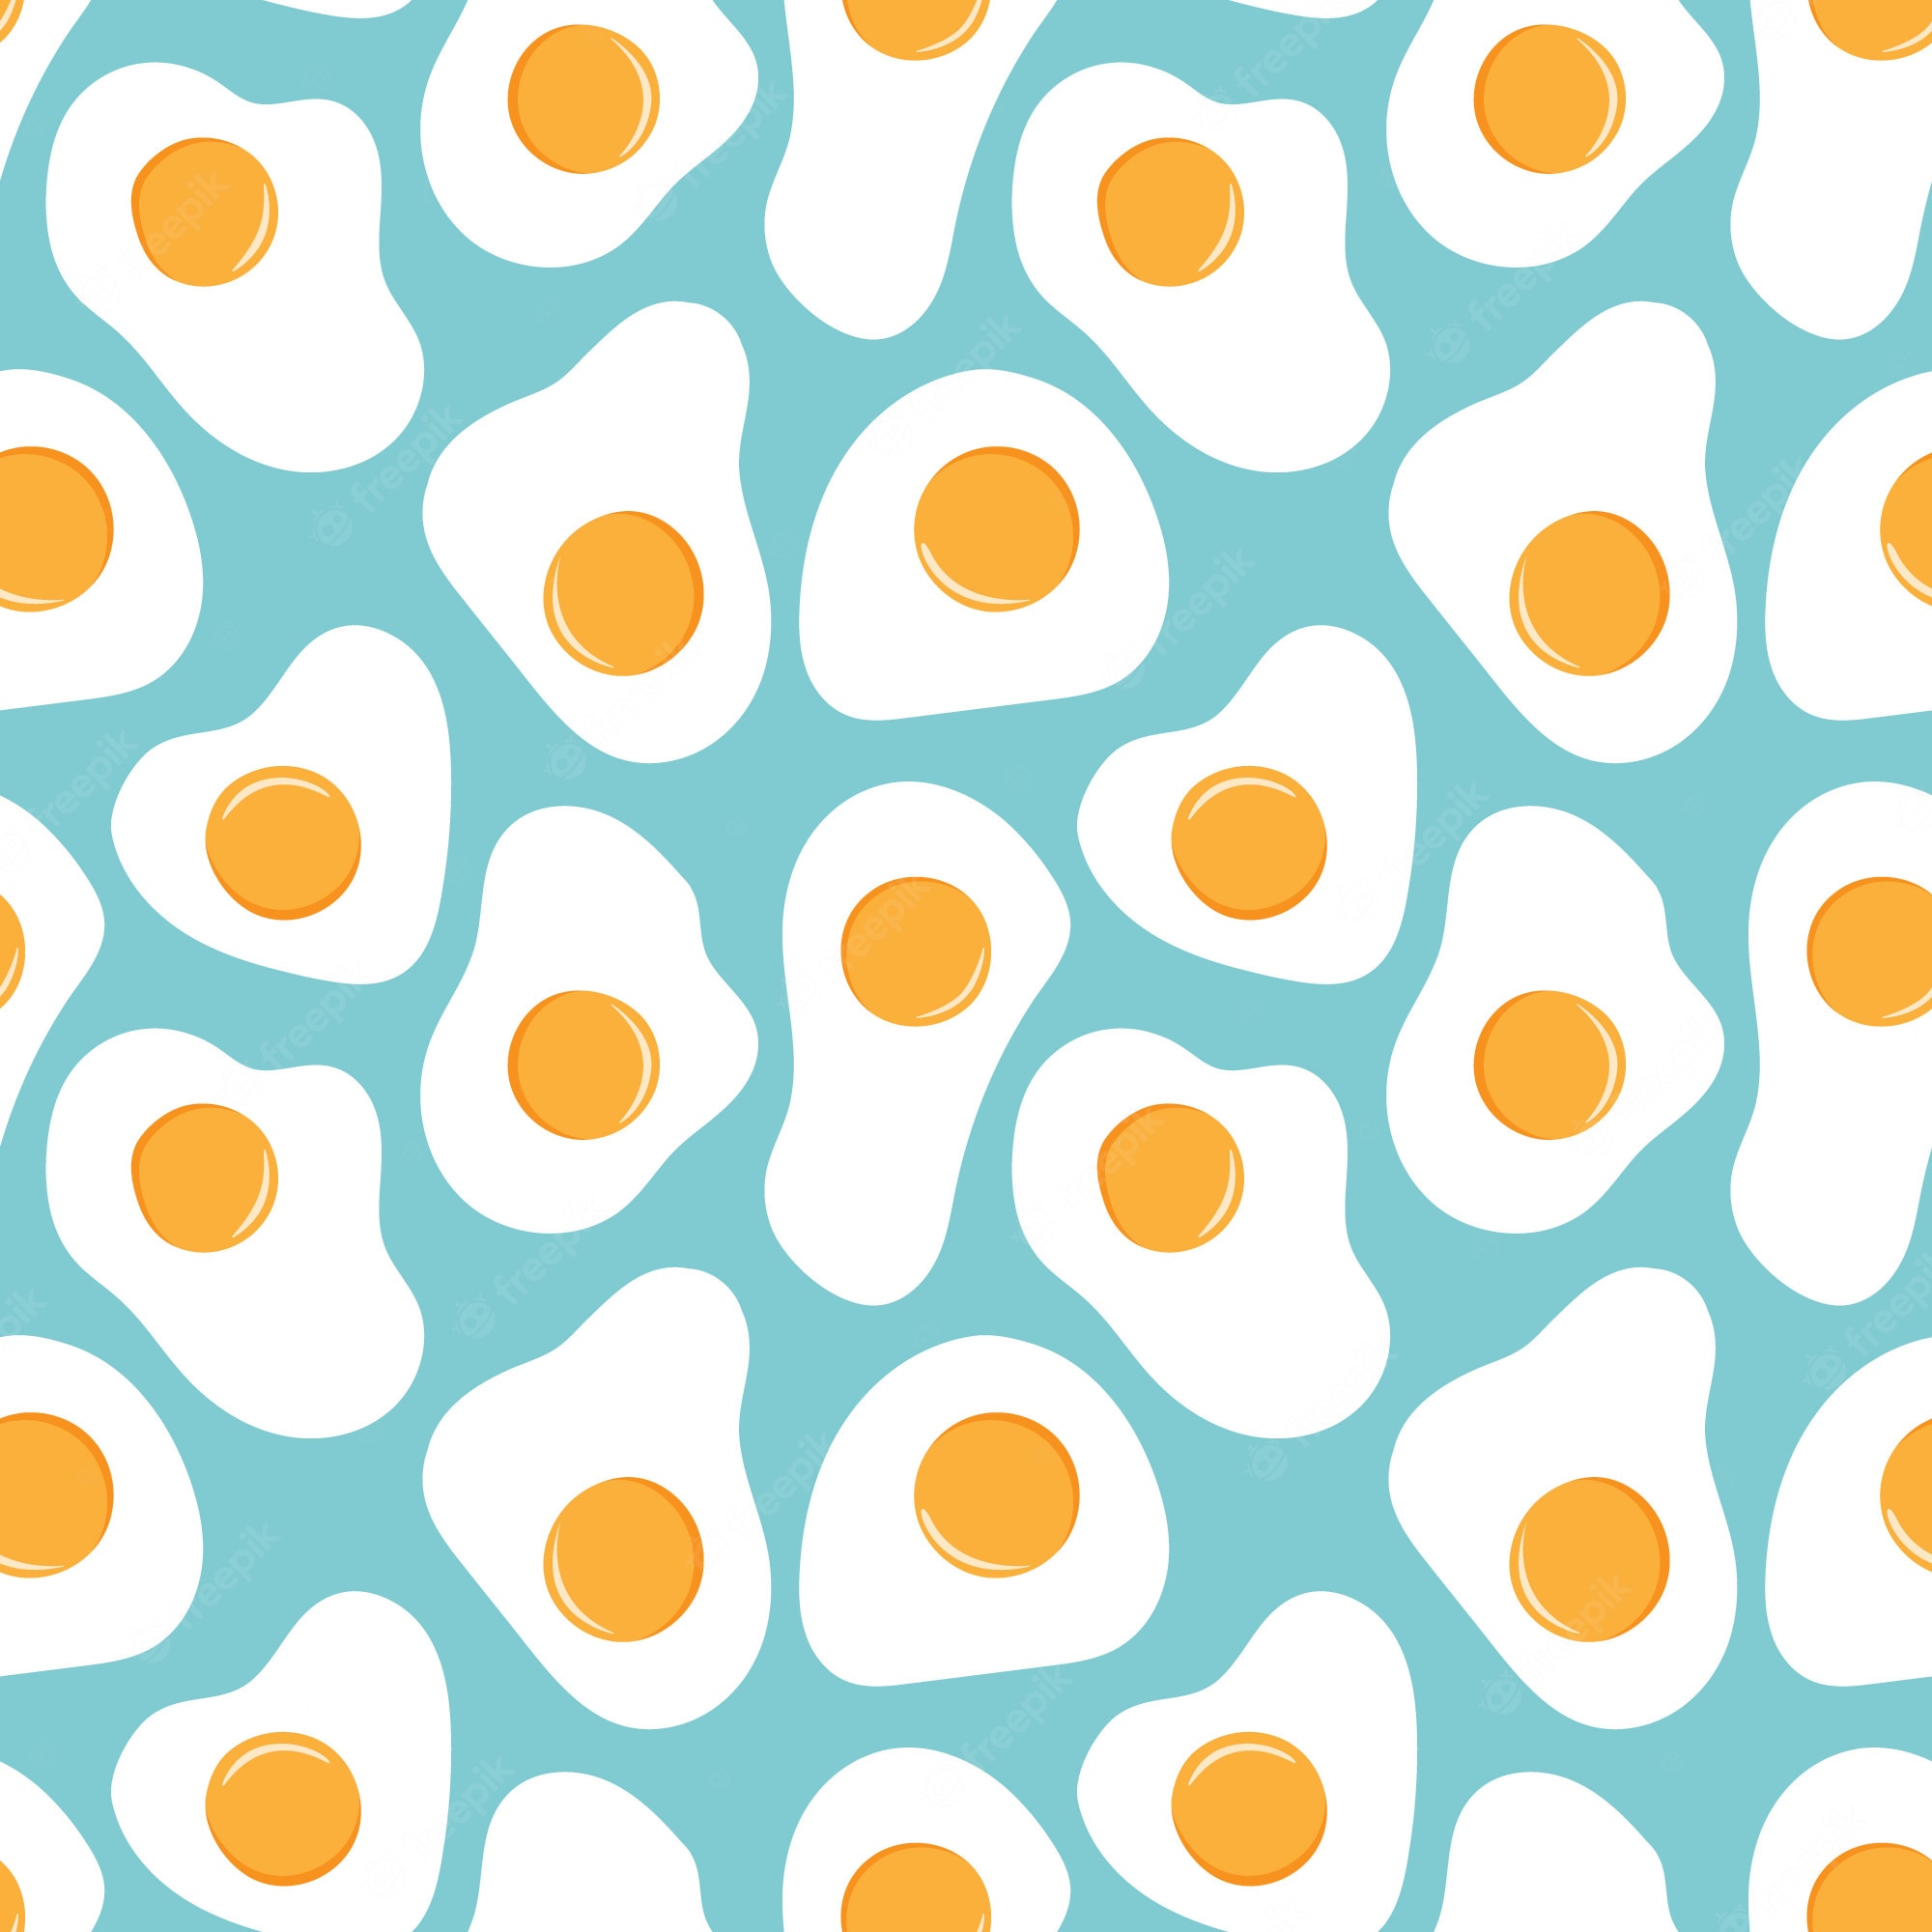 Egg pattern Vectors & Illustrations for Free Download